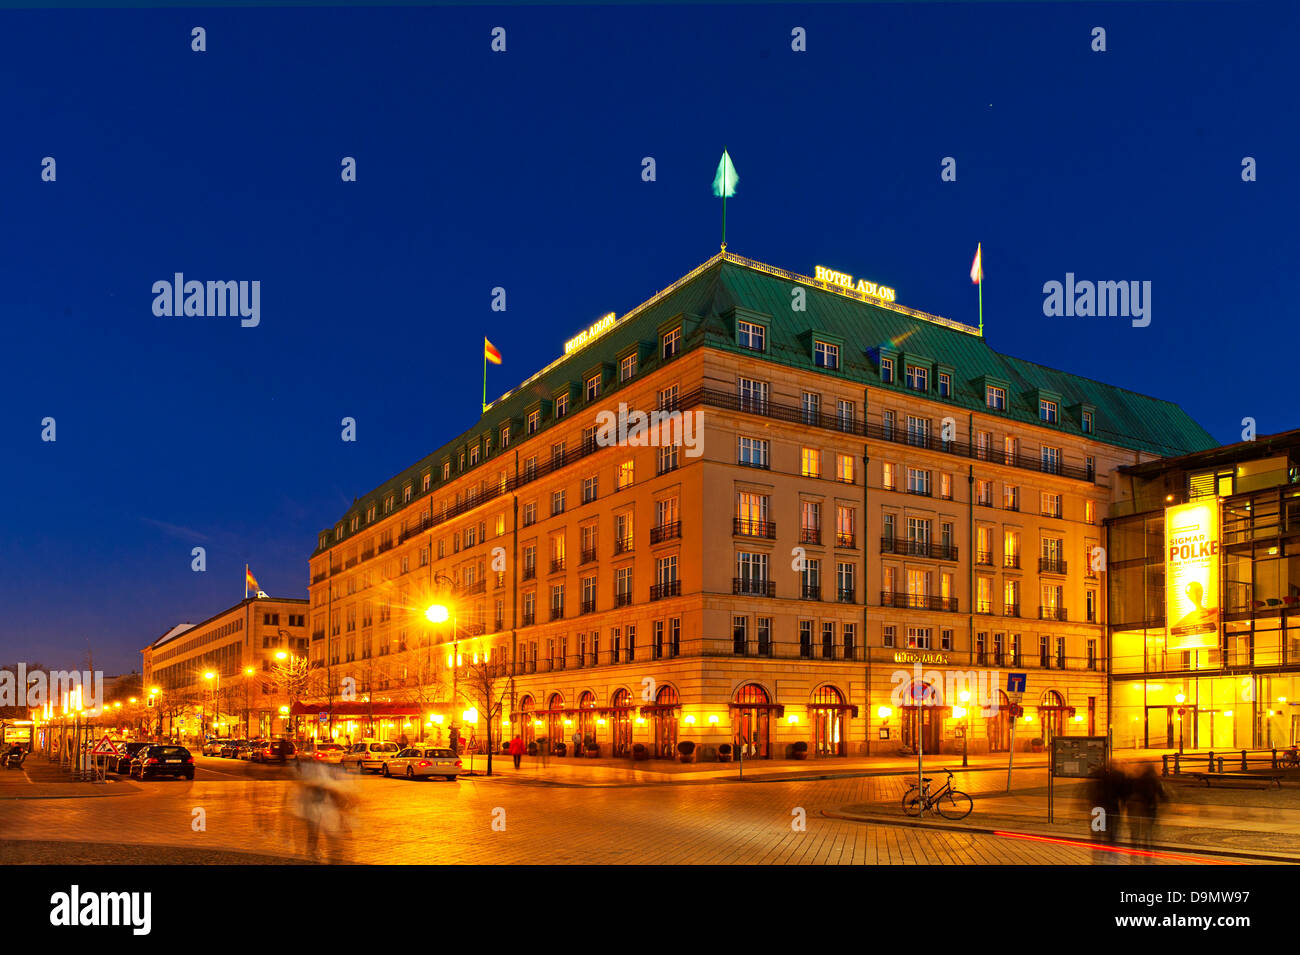 Hotel of Adlon at night Stock Photo